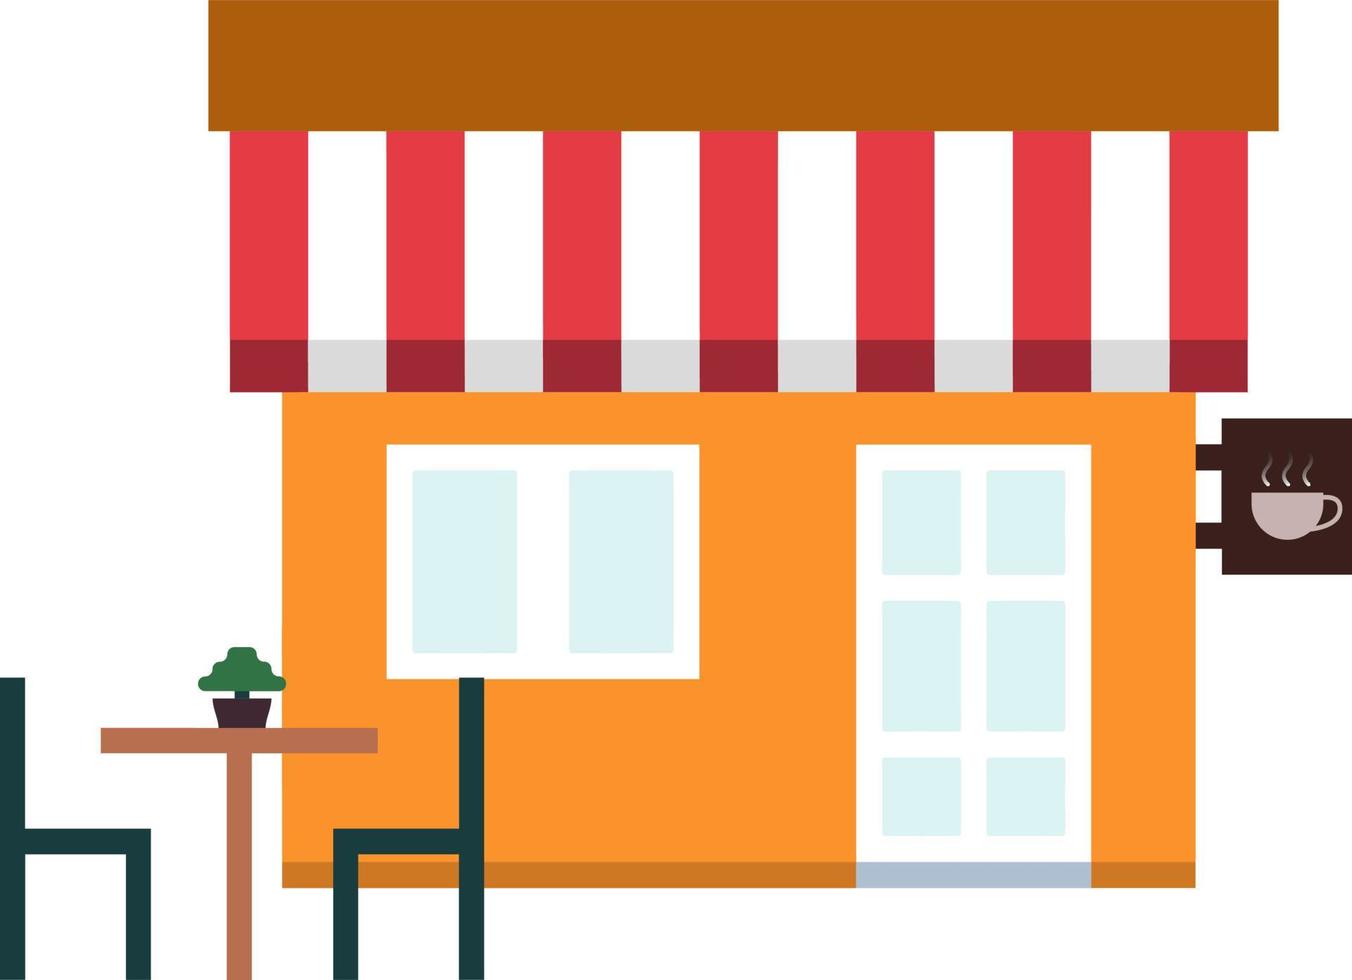 café tienda plano vector ilustración. sencillo café edificio. escaparate con aislado antecedentes